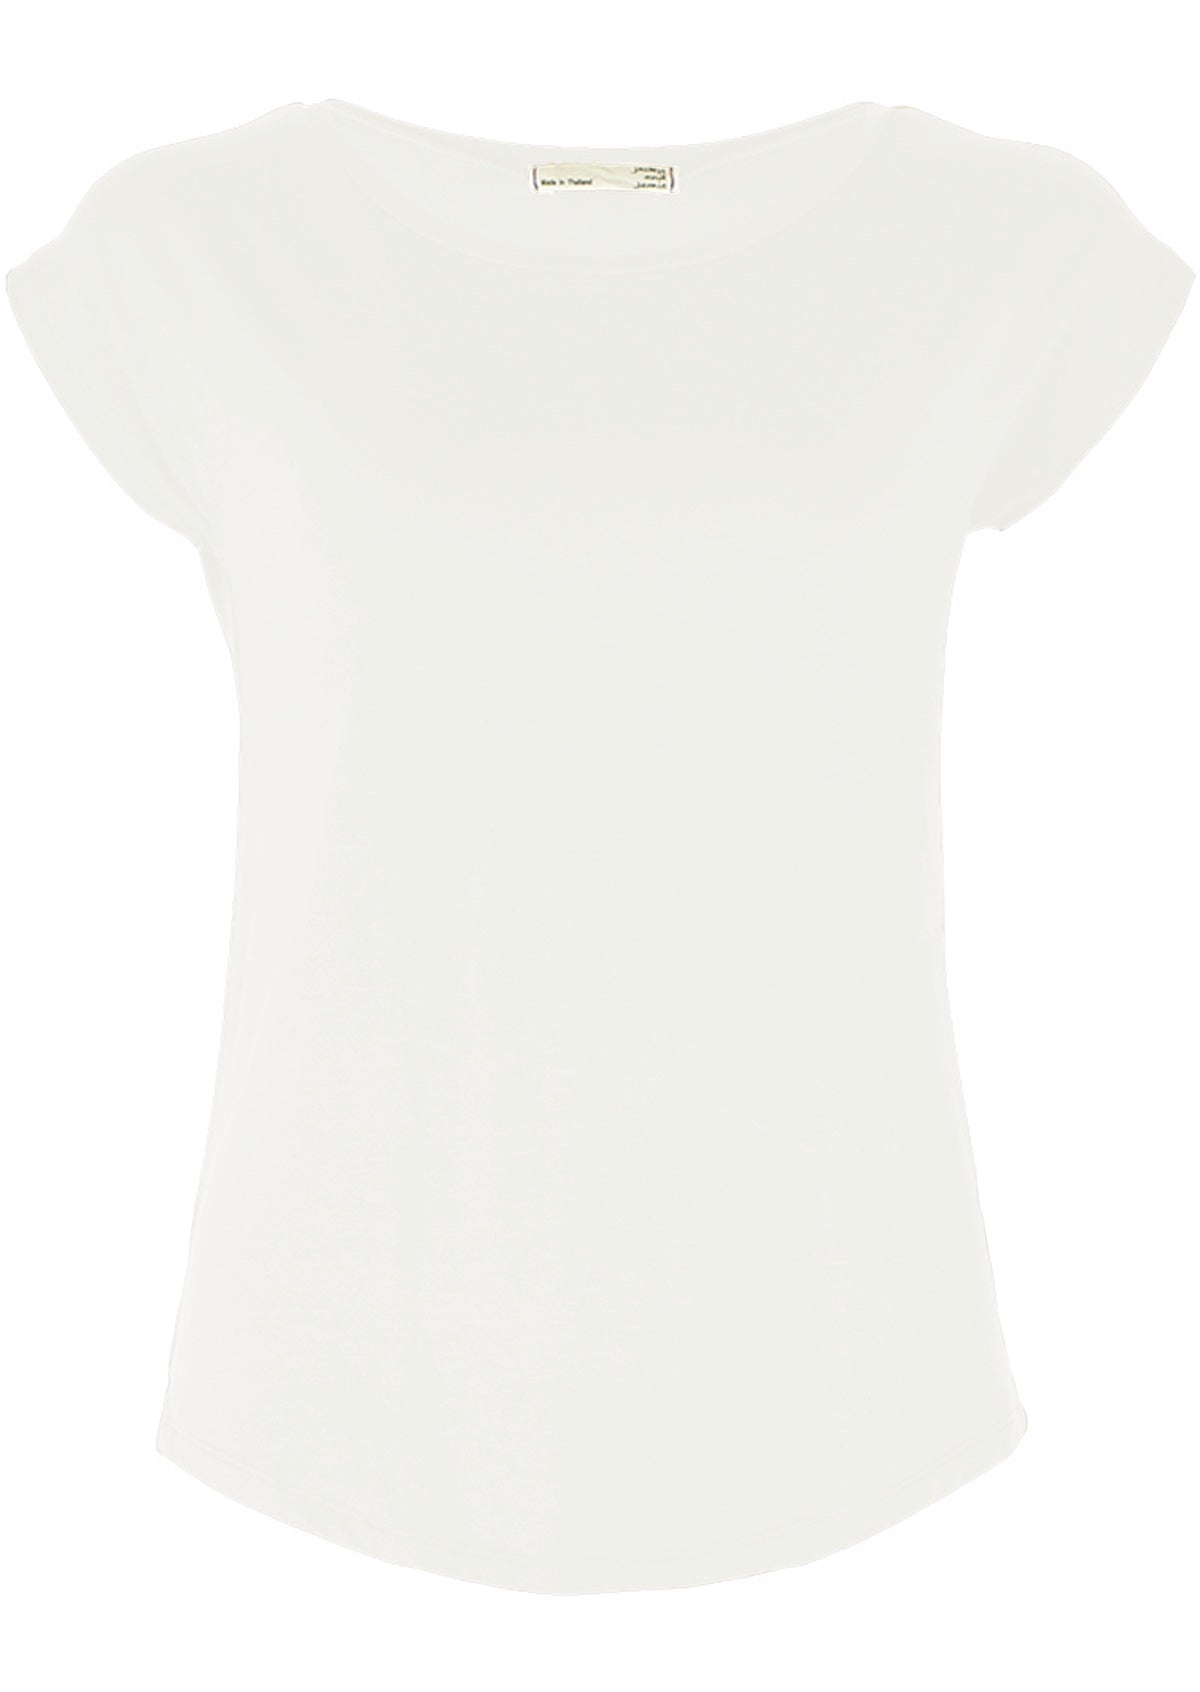 Front view women's white rayon jersey t-shirt.